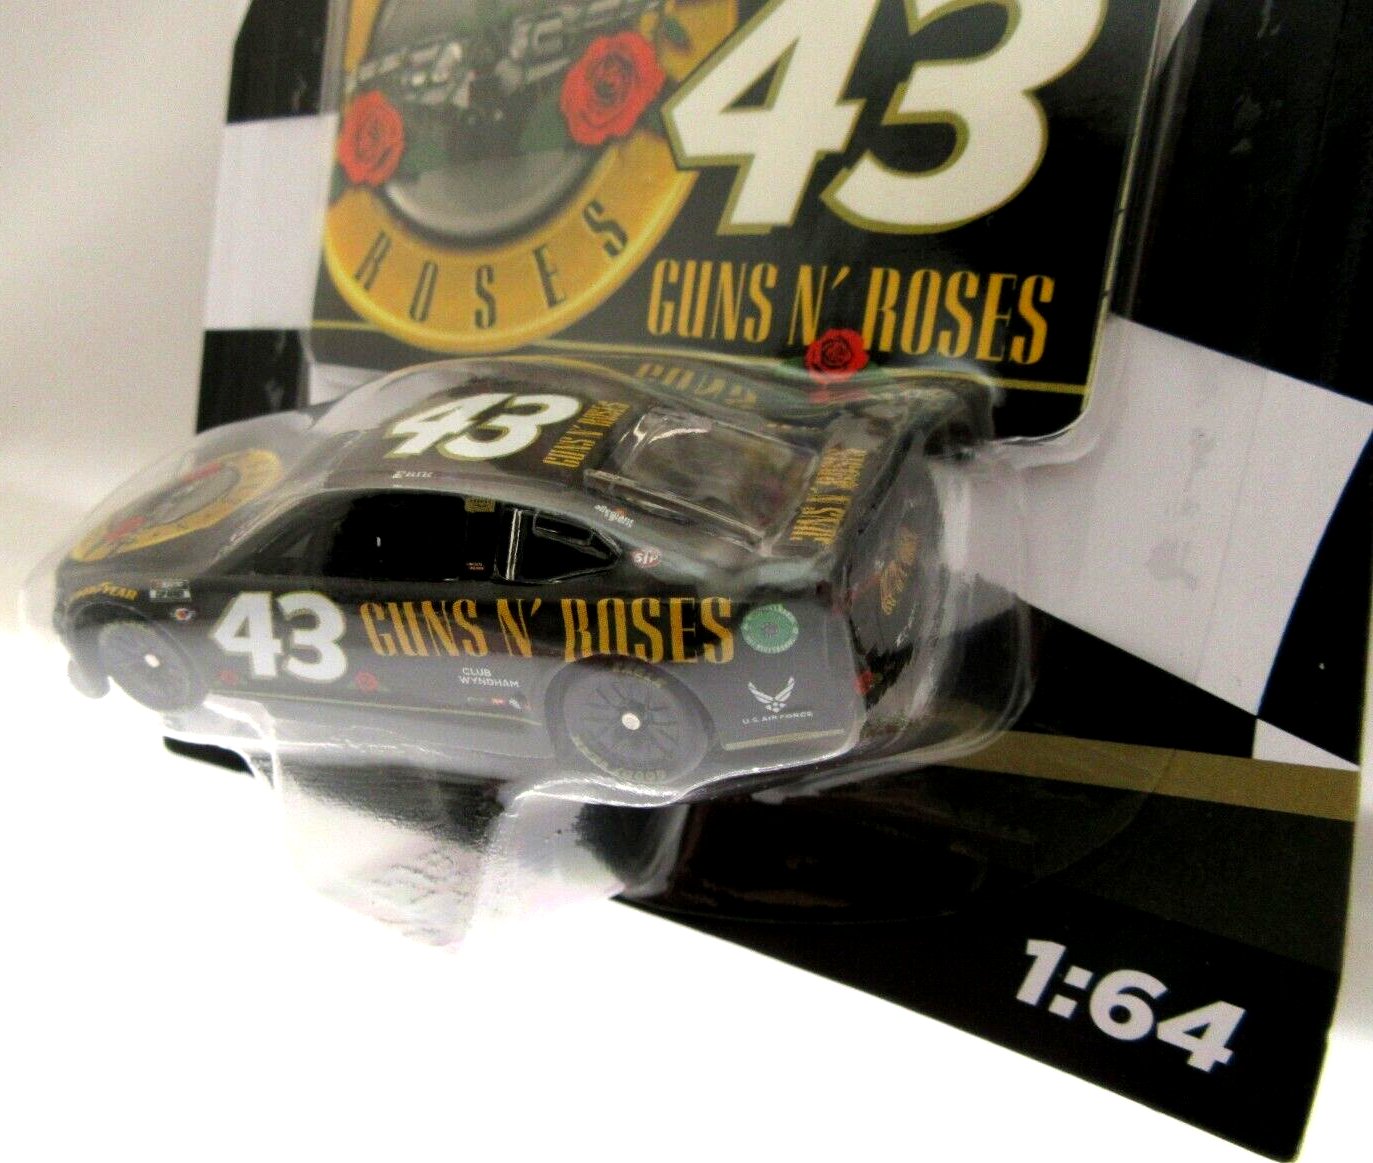 Erik Jones Guns N' Roses NASCAR Authentics ~ w/Sticker ~ Die Cast 1:64 Scale